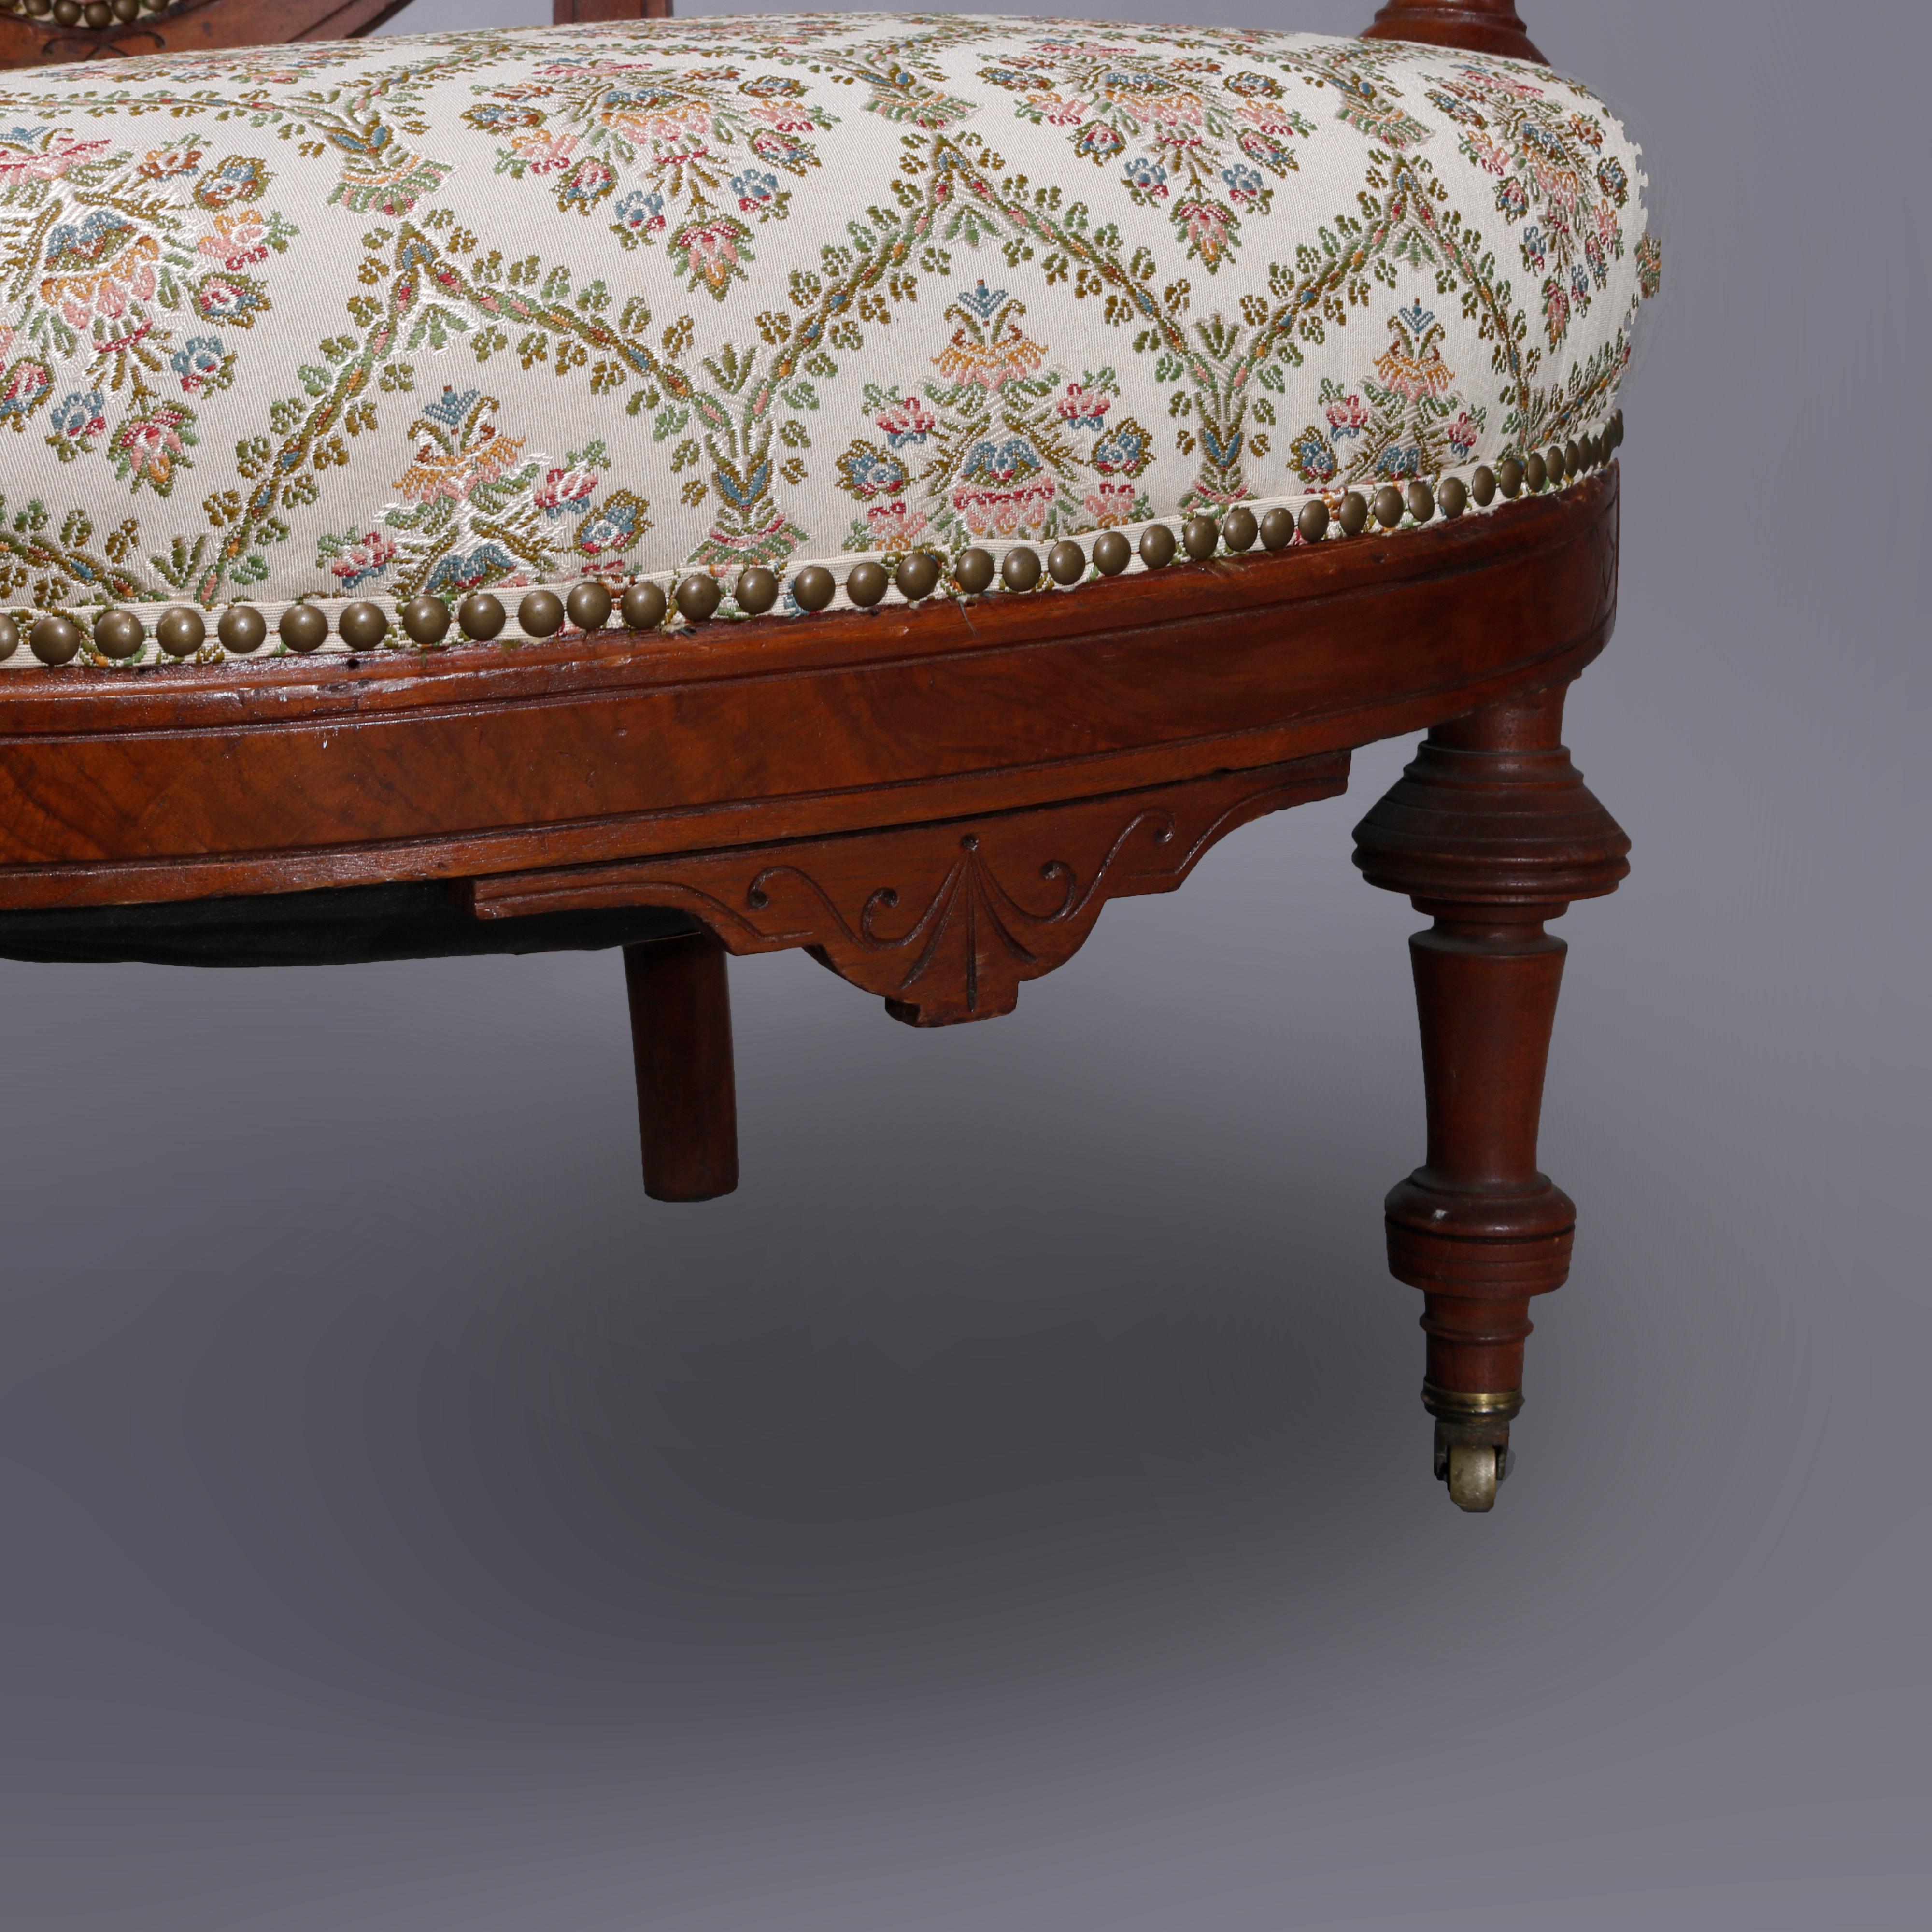 European Antique Renaissance Revival Walnut & Burl Parlor Armchairs with Marquetry, c1880 For Sale